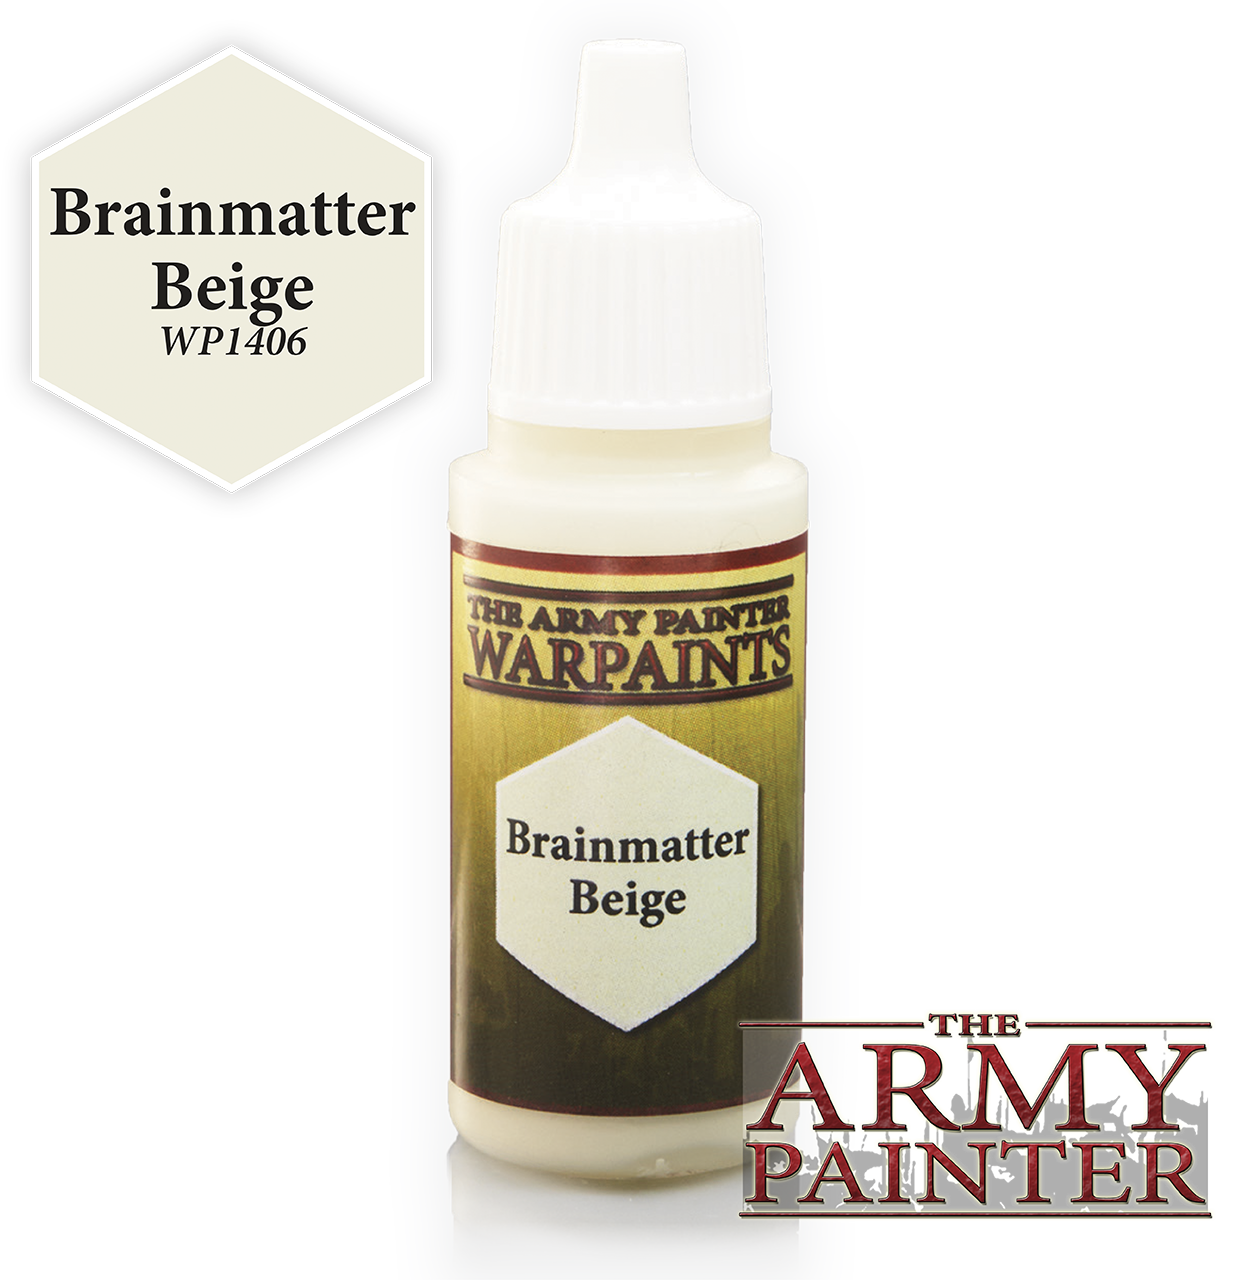 Brainmatter Beige - Army Painter Warpaints